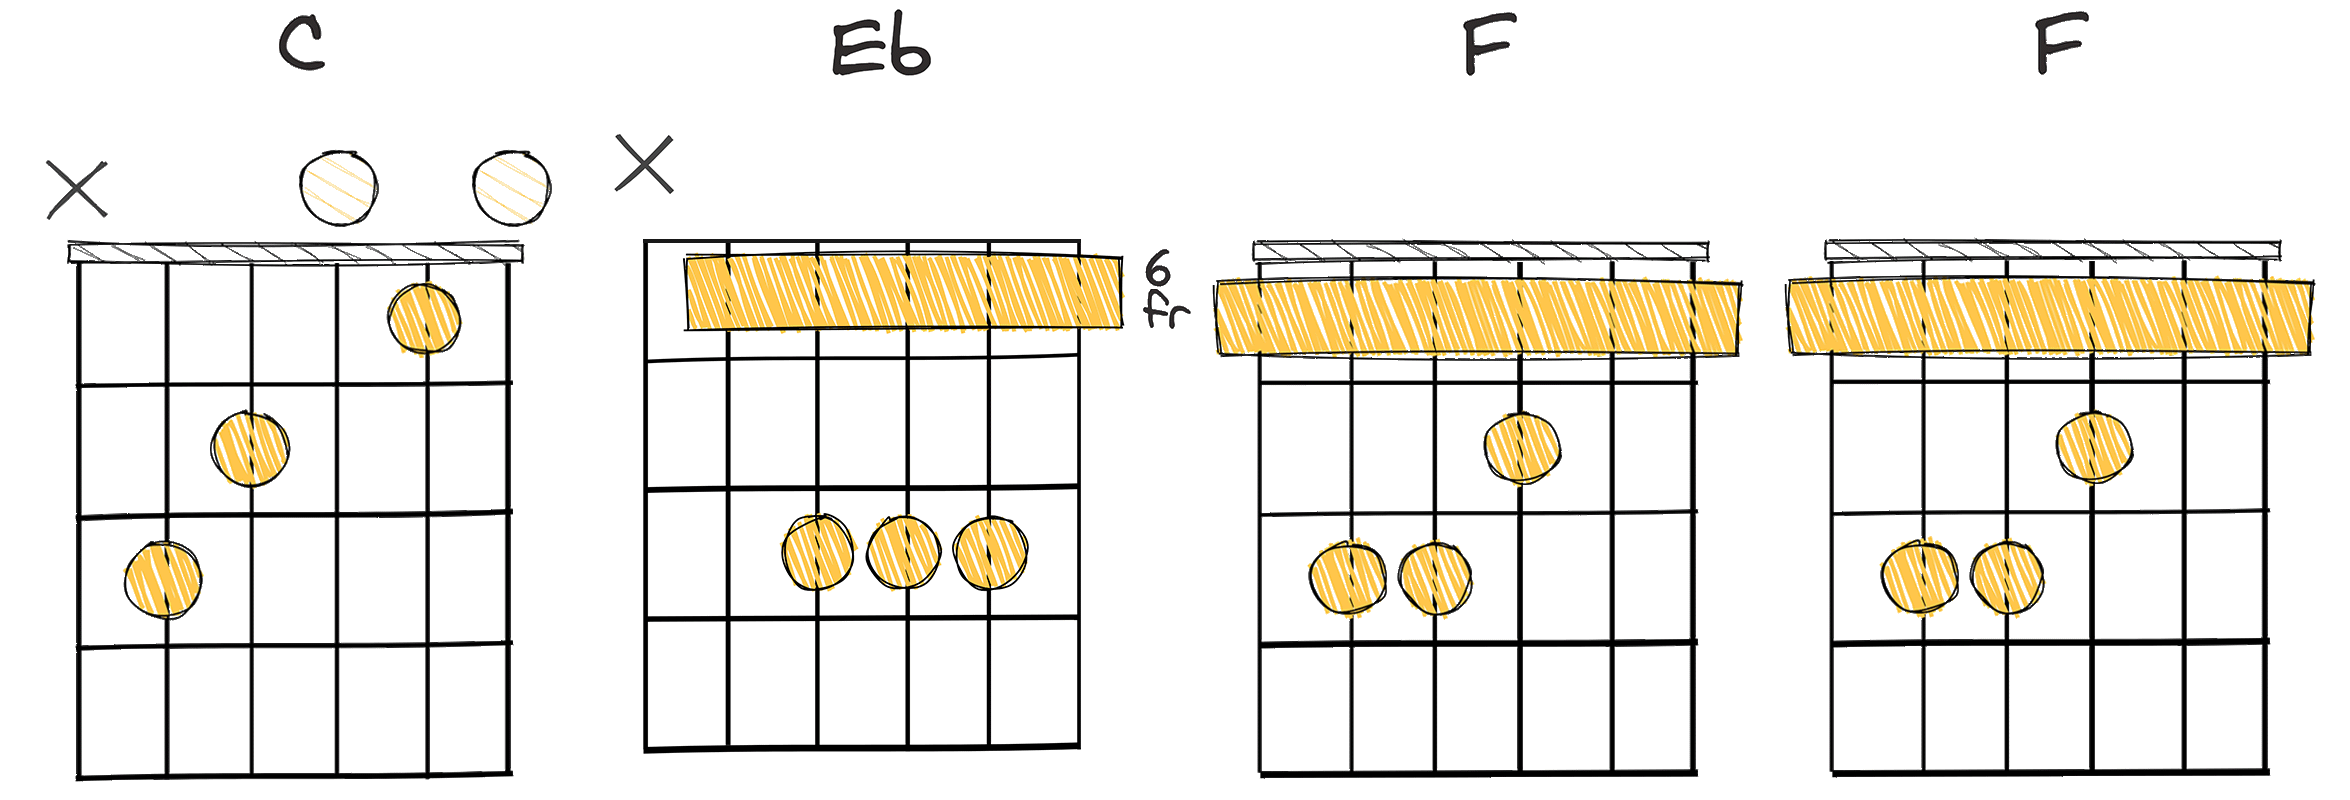 I - bIII - IV - IV (1 - flat3 - 4 - 4) chords diagram